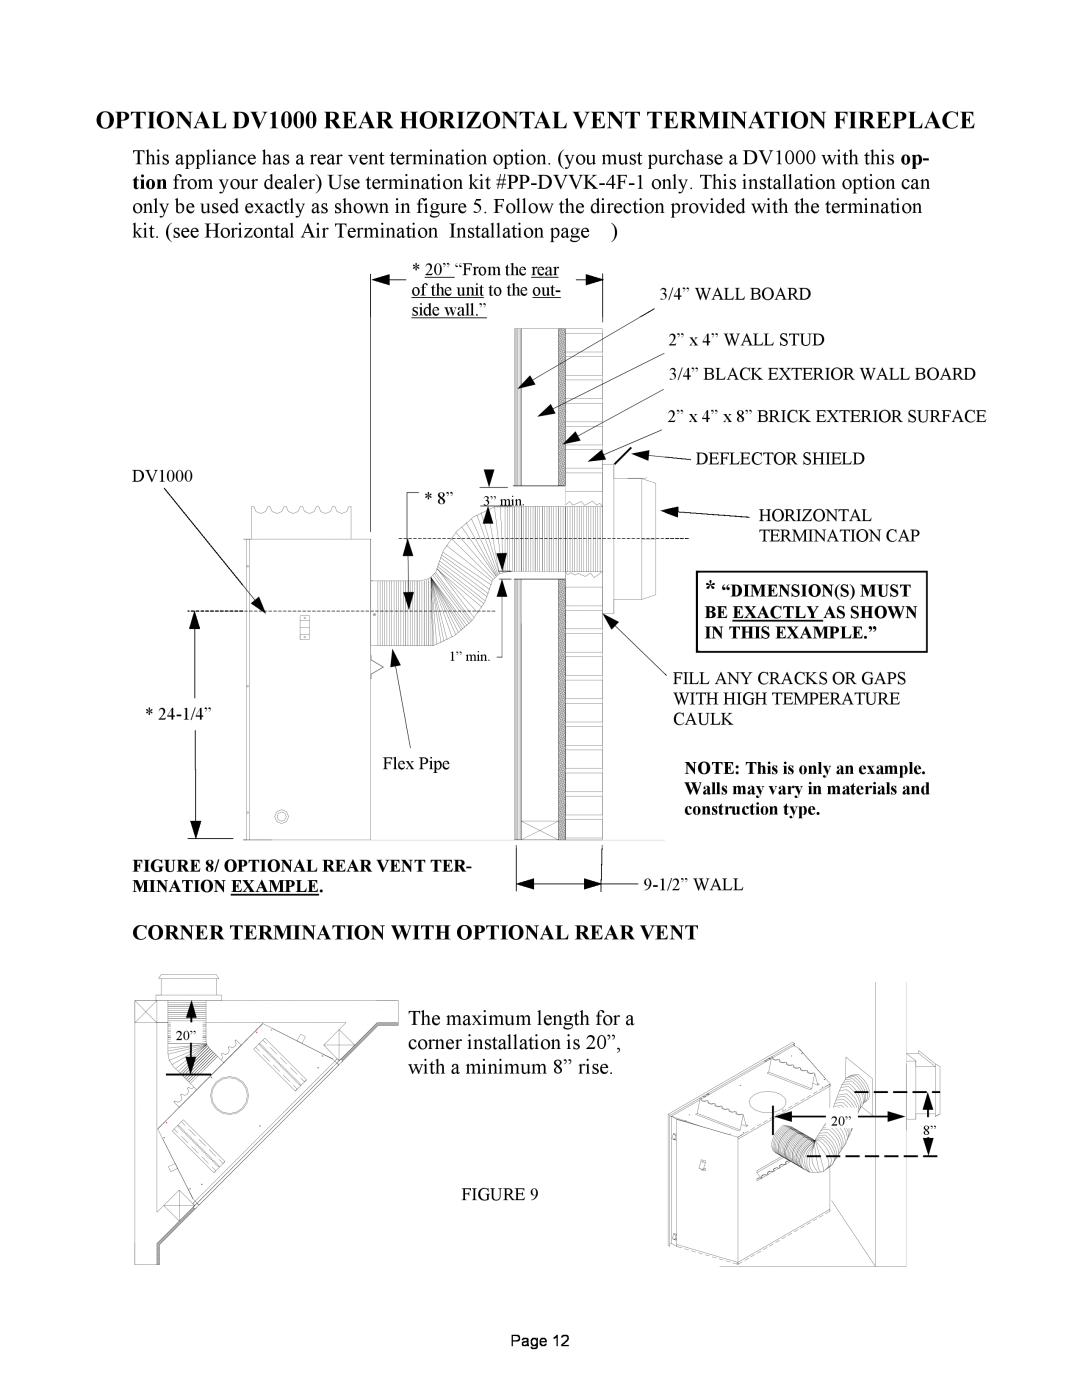 New Buck Corporation DV1000 manual Corner Termination With Optional Rear Vent, Optional Rear Vent Ter, 9-1/2”WALL 